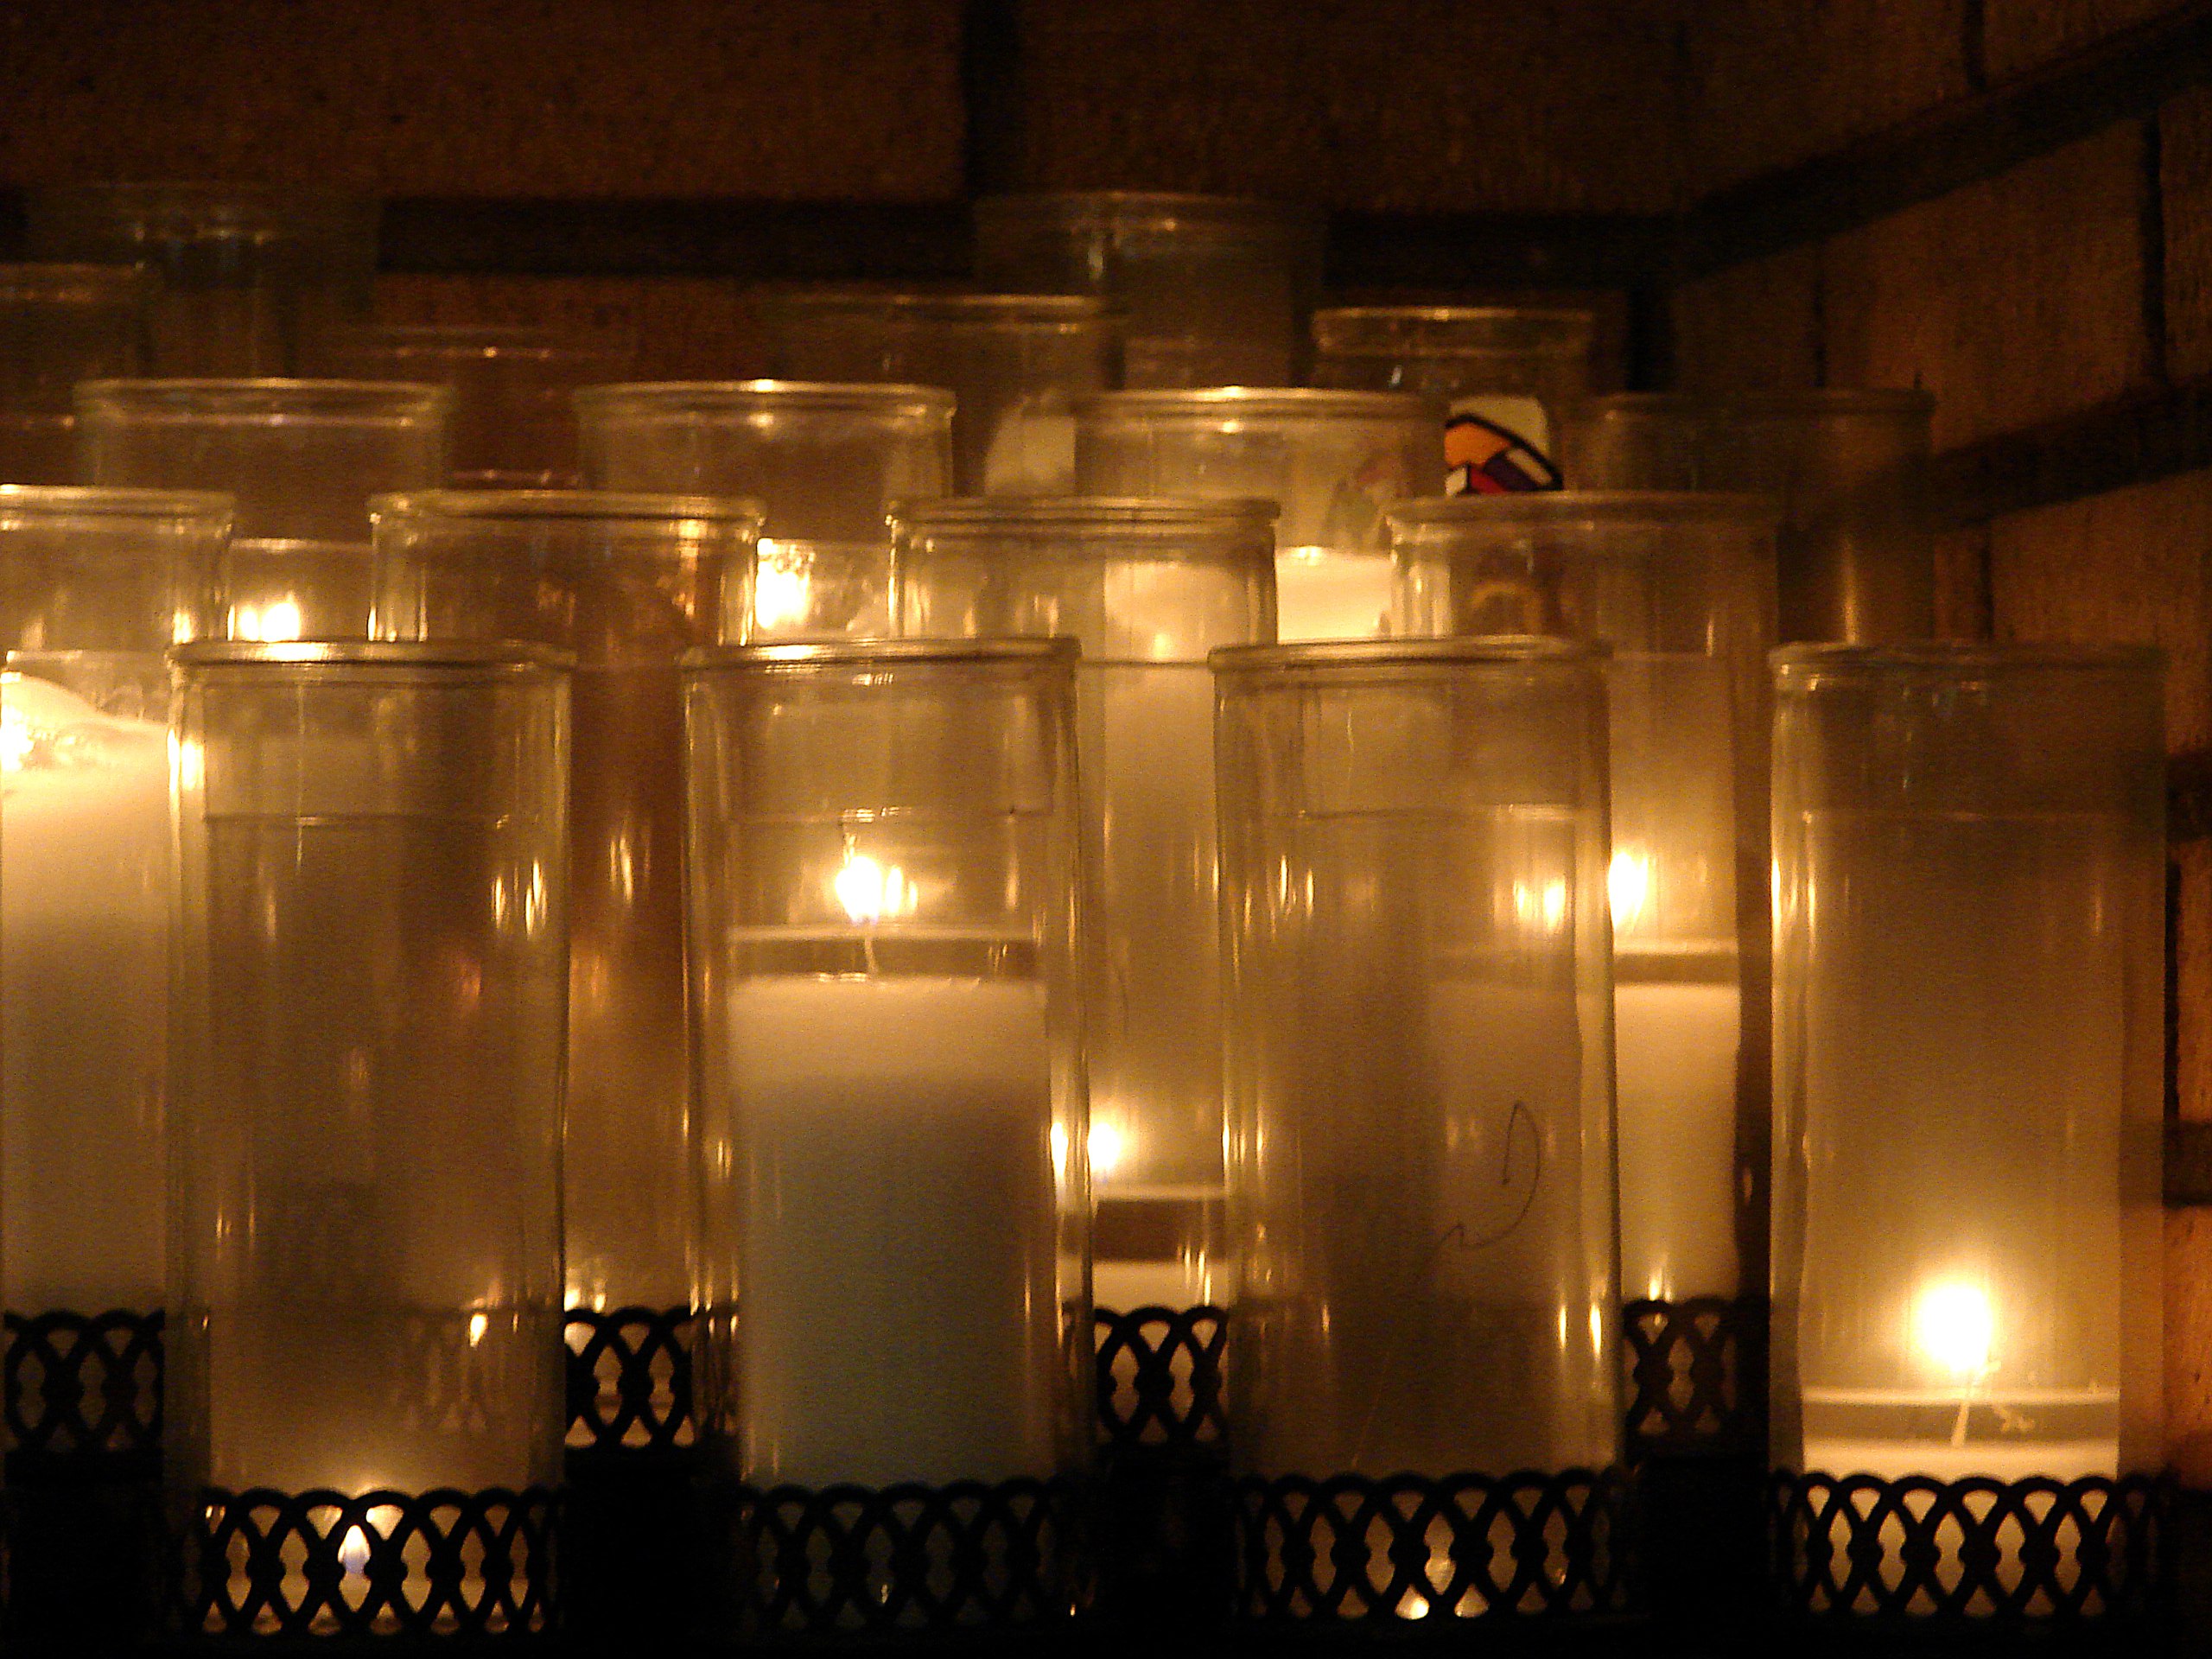 Chapel Candles lit